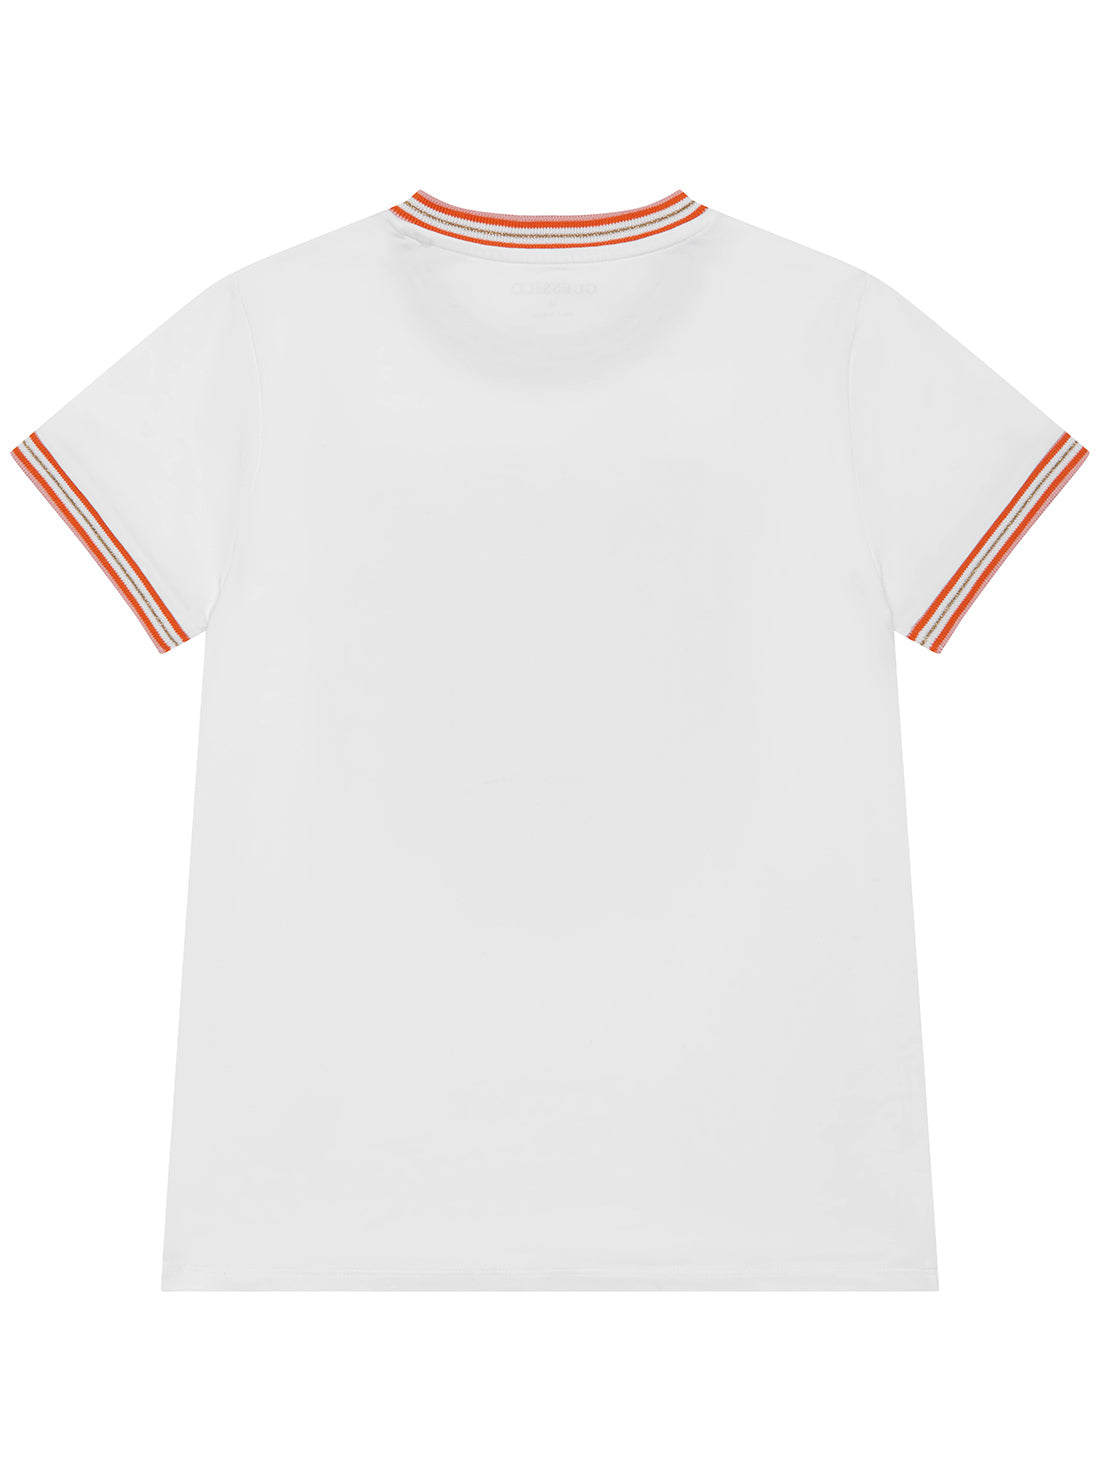 White More Love Logo T-Shirt (7-16) | GUESS Kids | back view